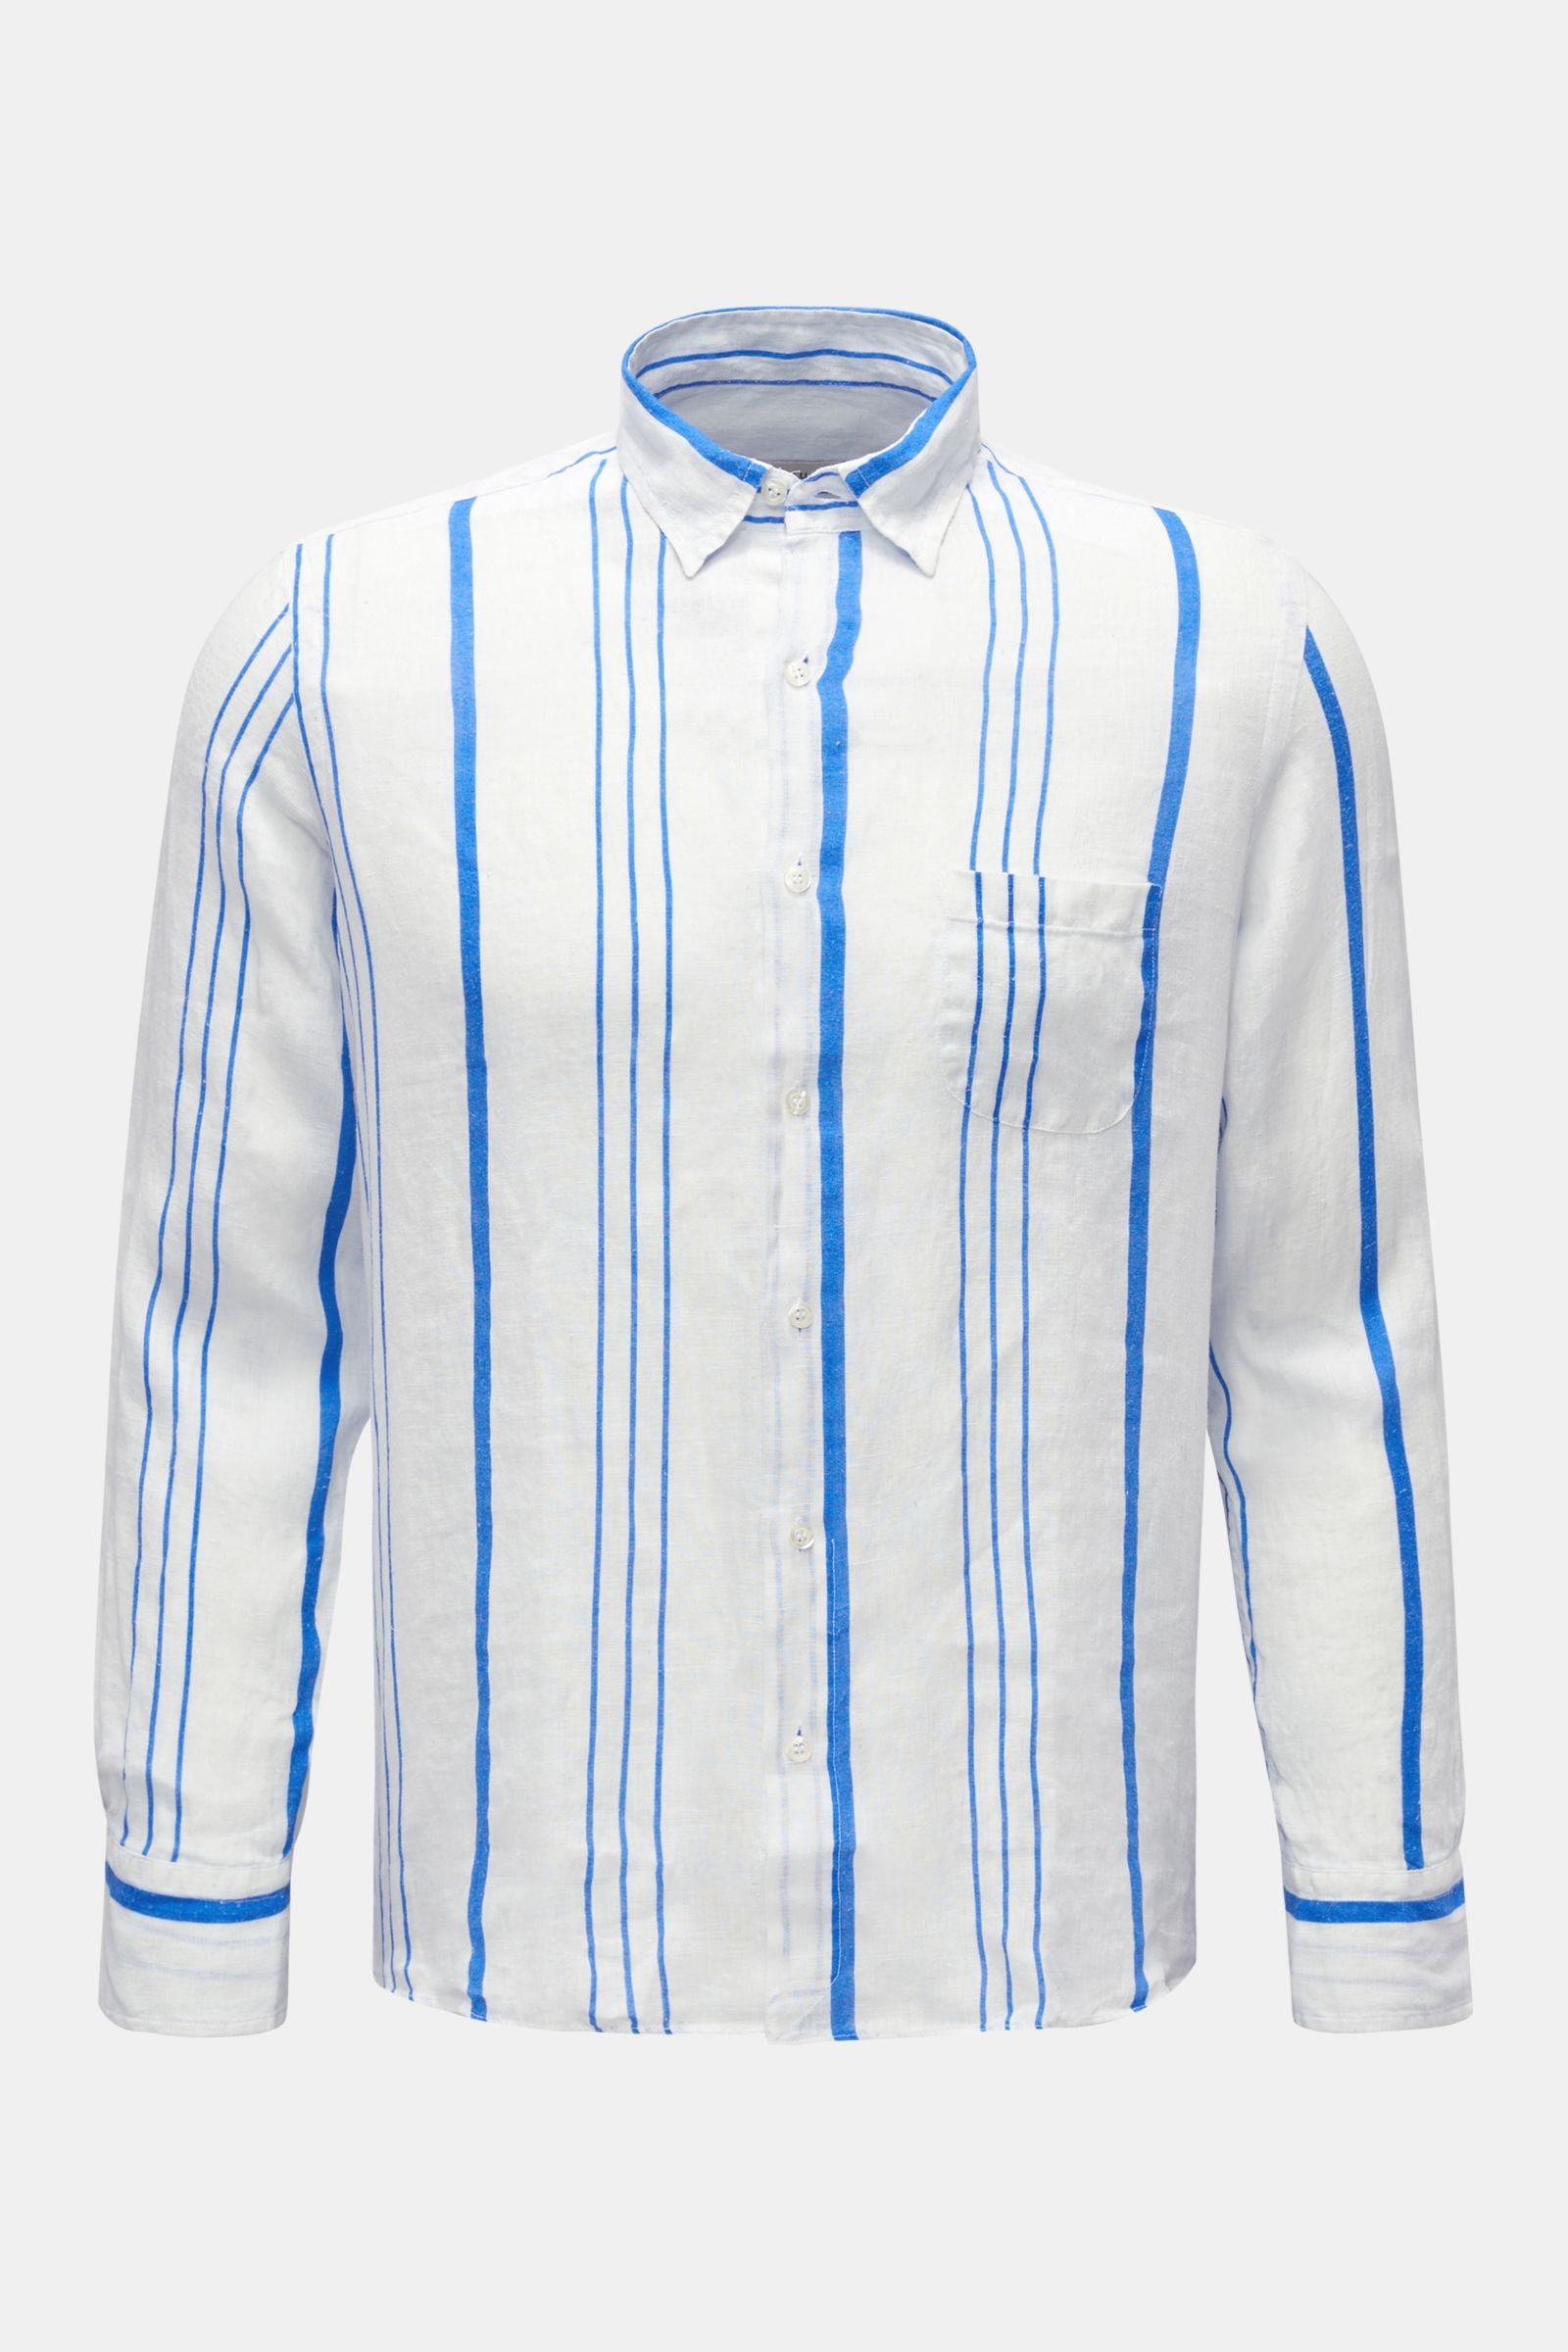 Linen shirt slim collar blue/white striped